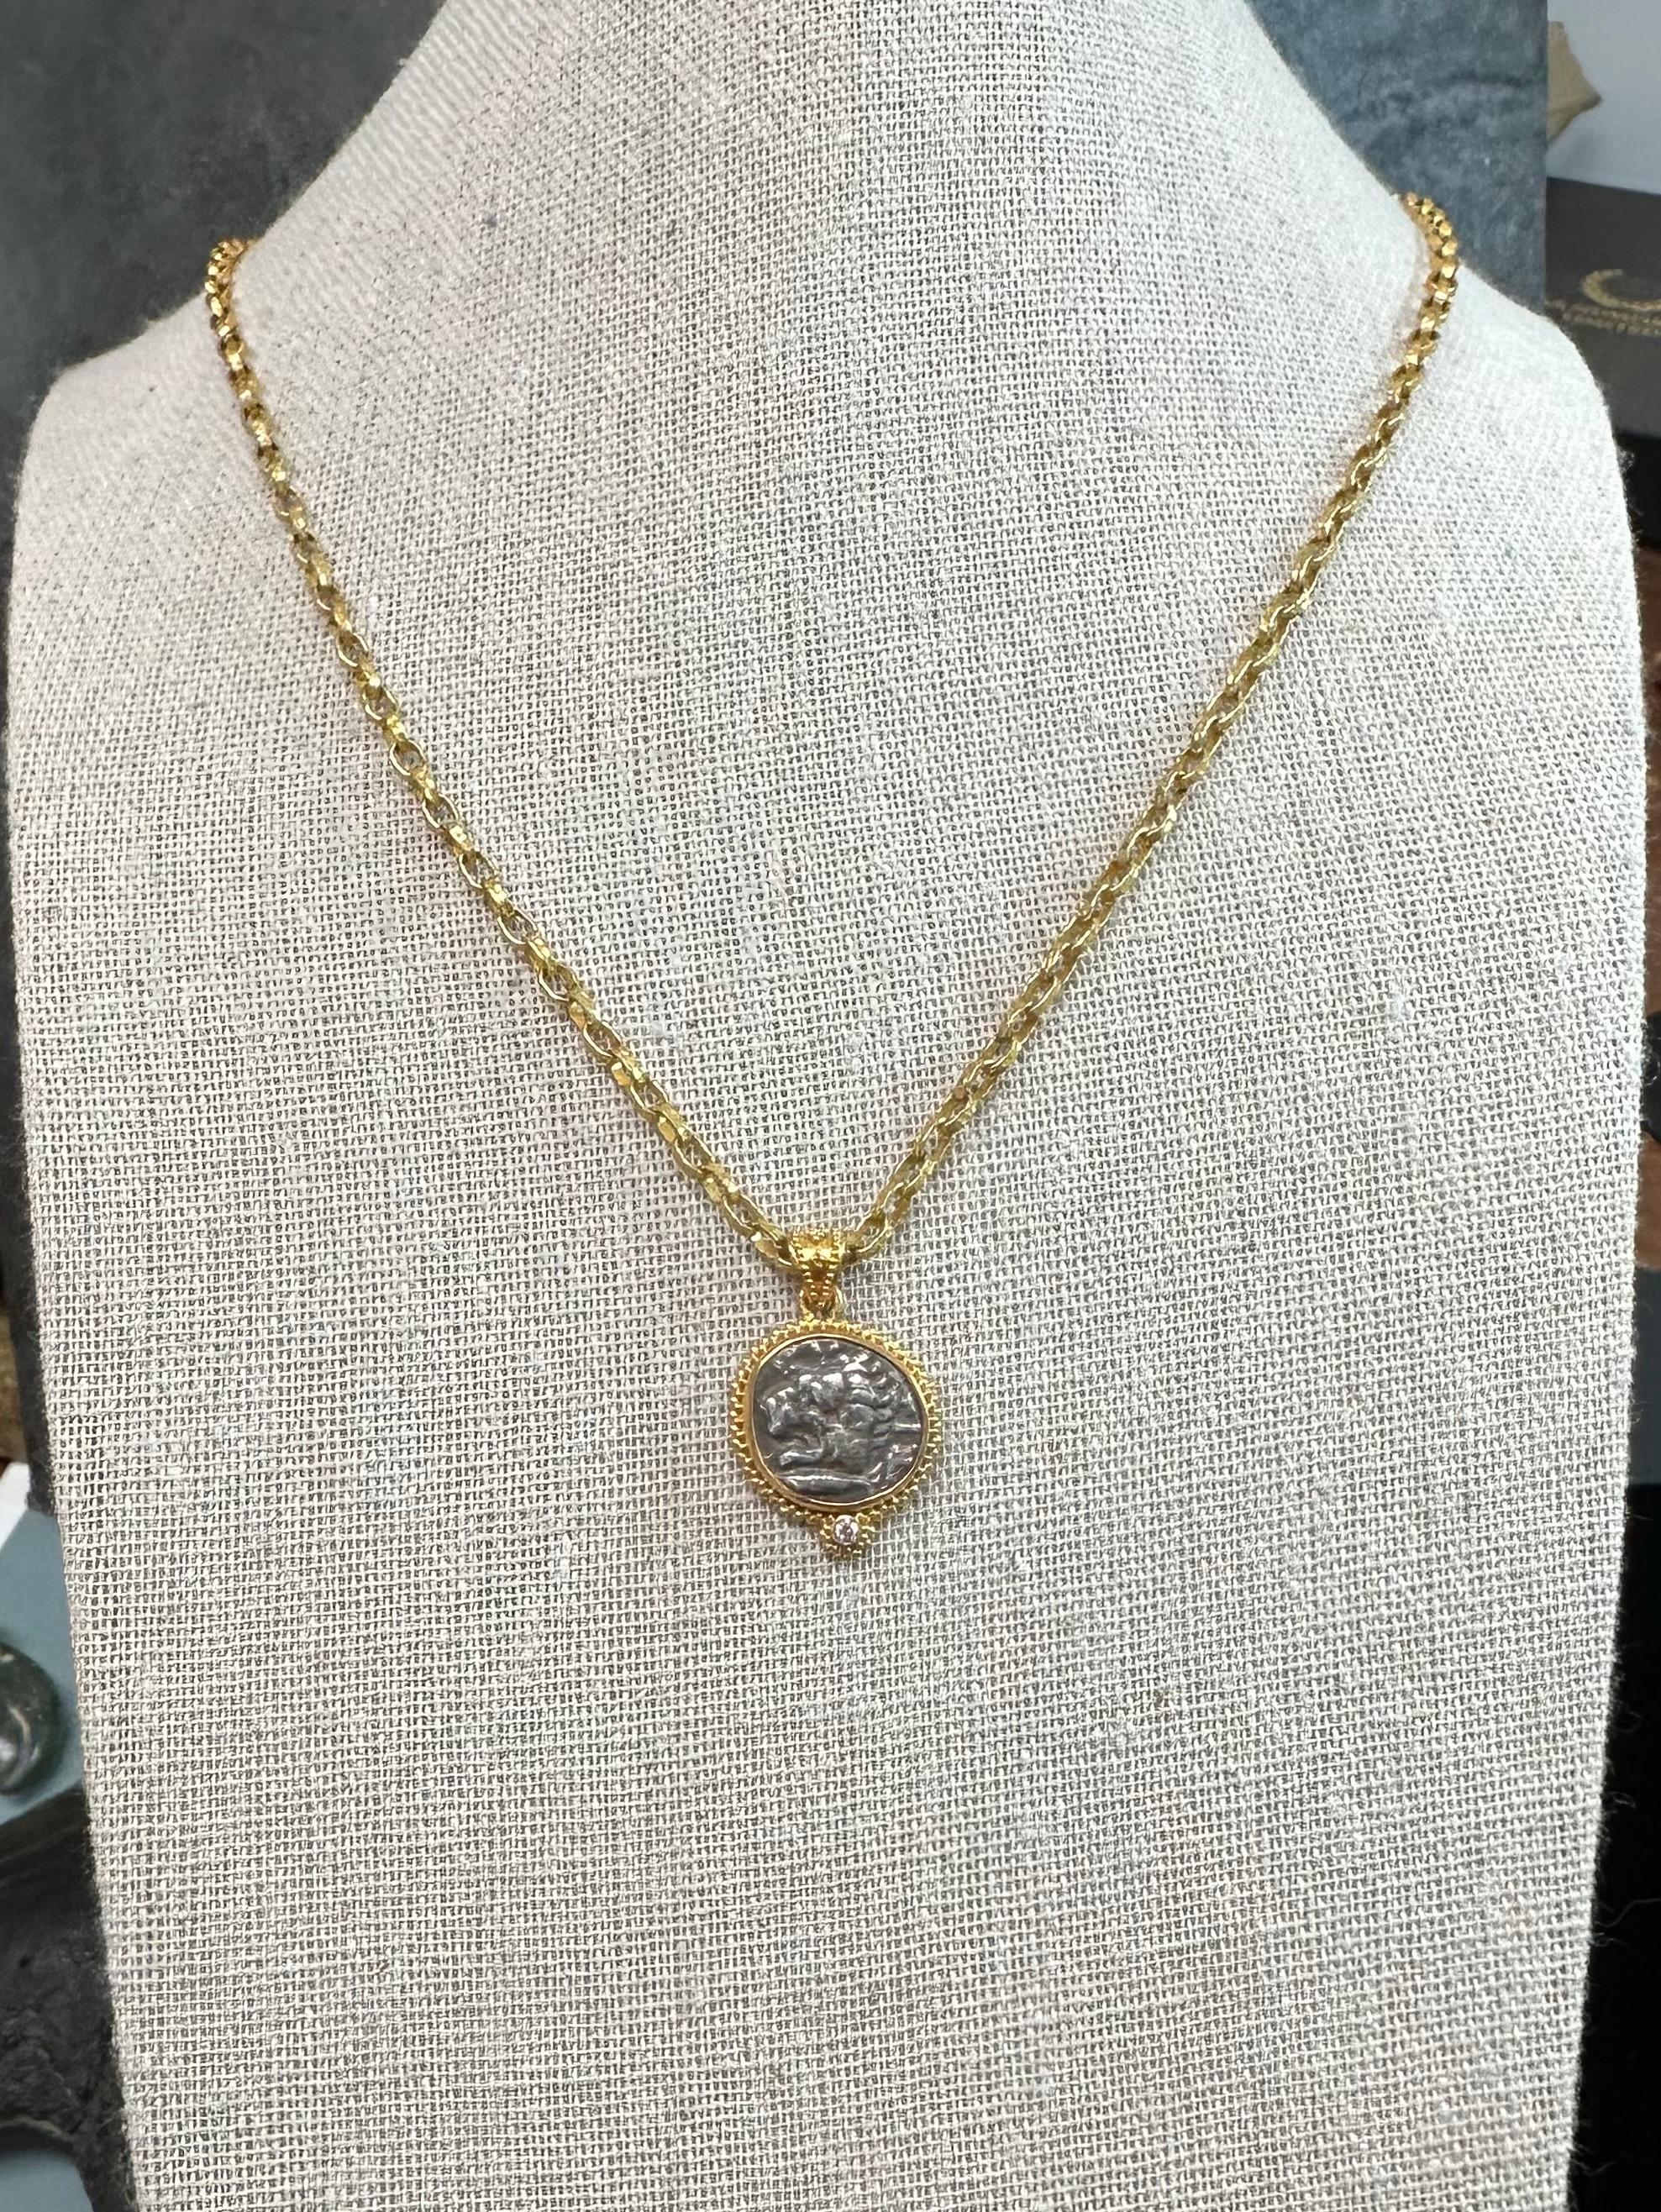 Women's or Men's Ancient Greek 4th Century BC Cyzikos Lion Coin Diamond 22K Gold Pendant For Sale